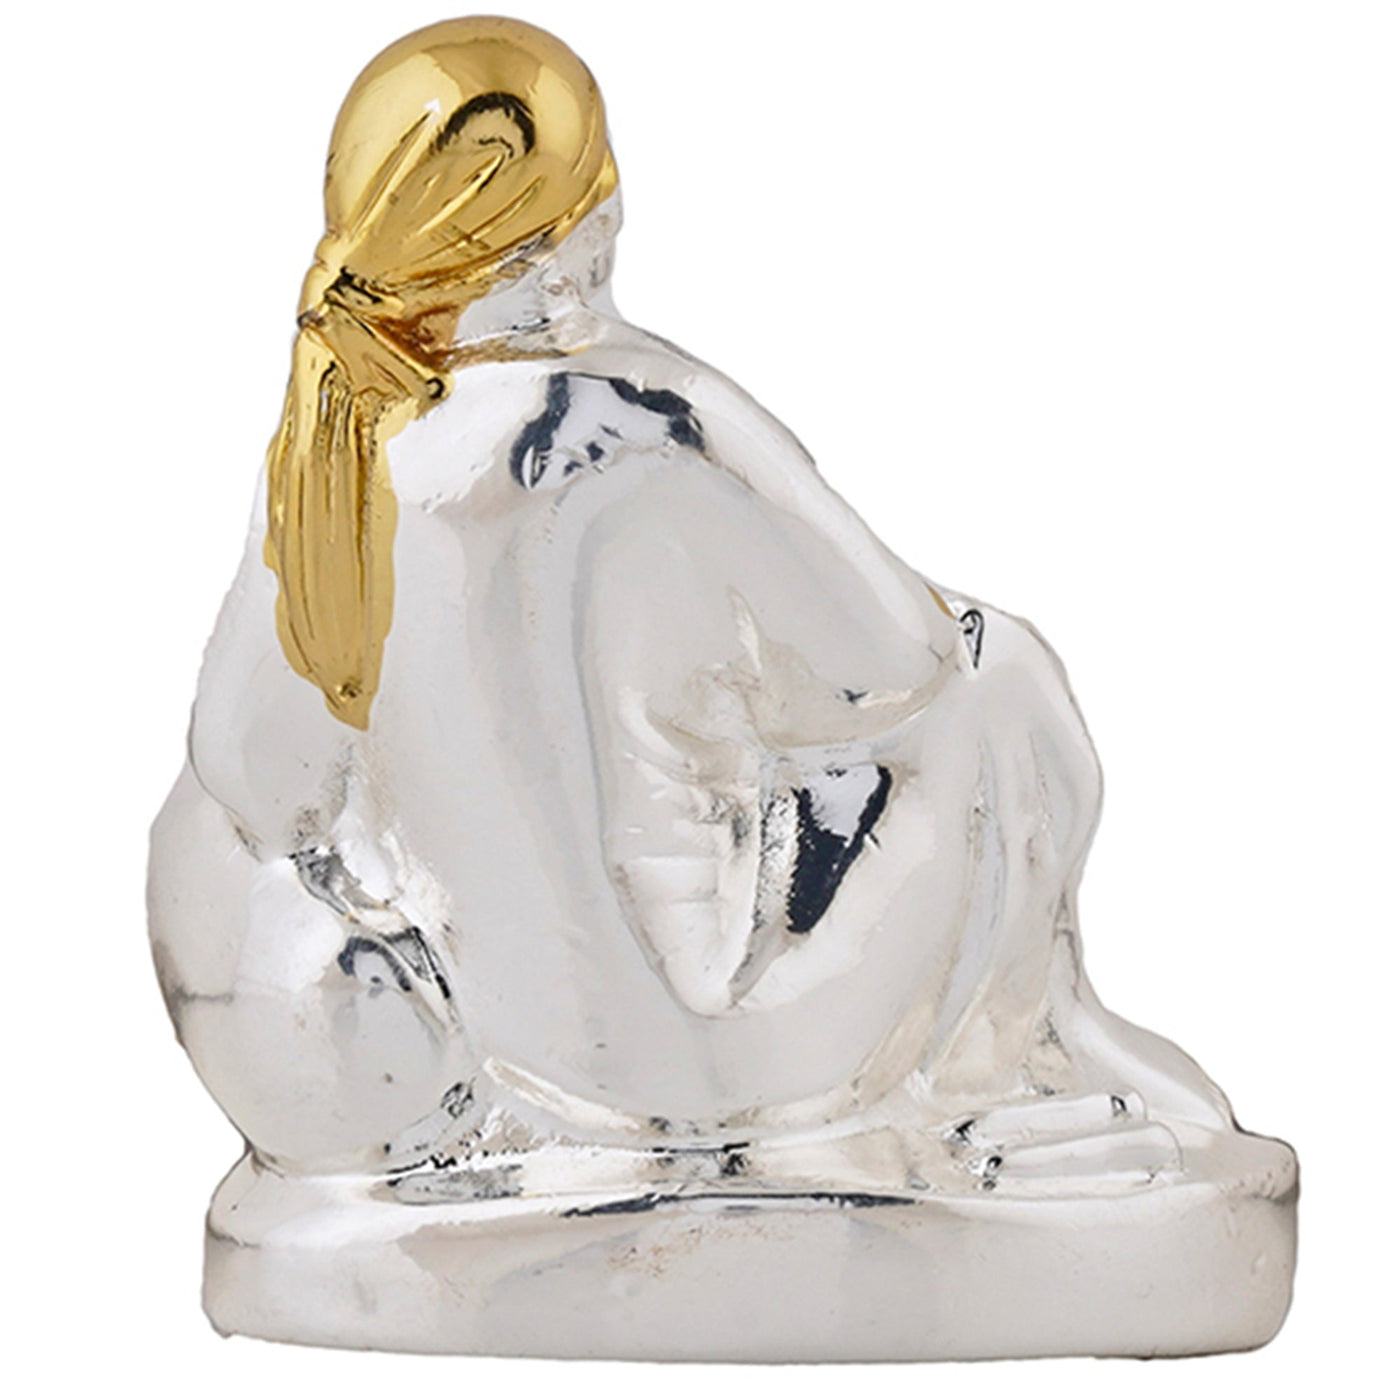 Estele Gold - Rhodium Plated Divine Lord Sai Baba Idol